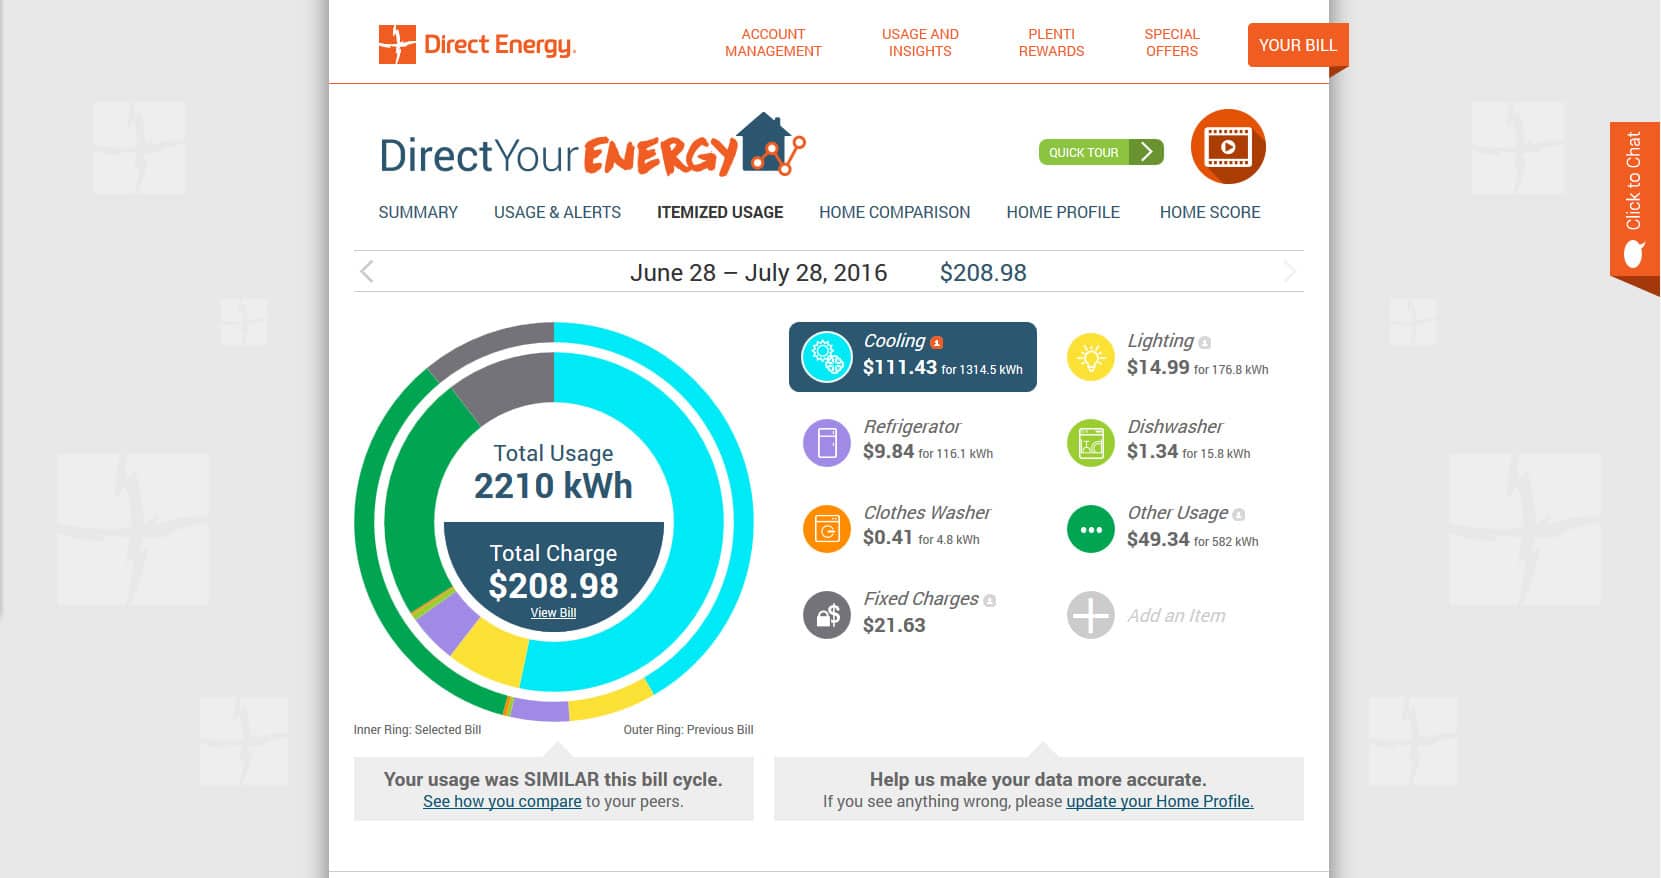 Direct Energy Business Rebates